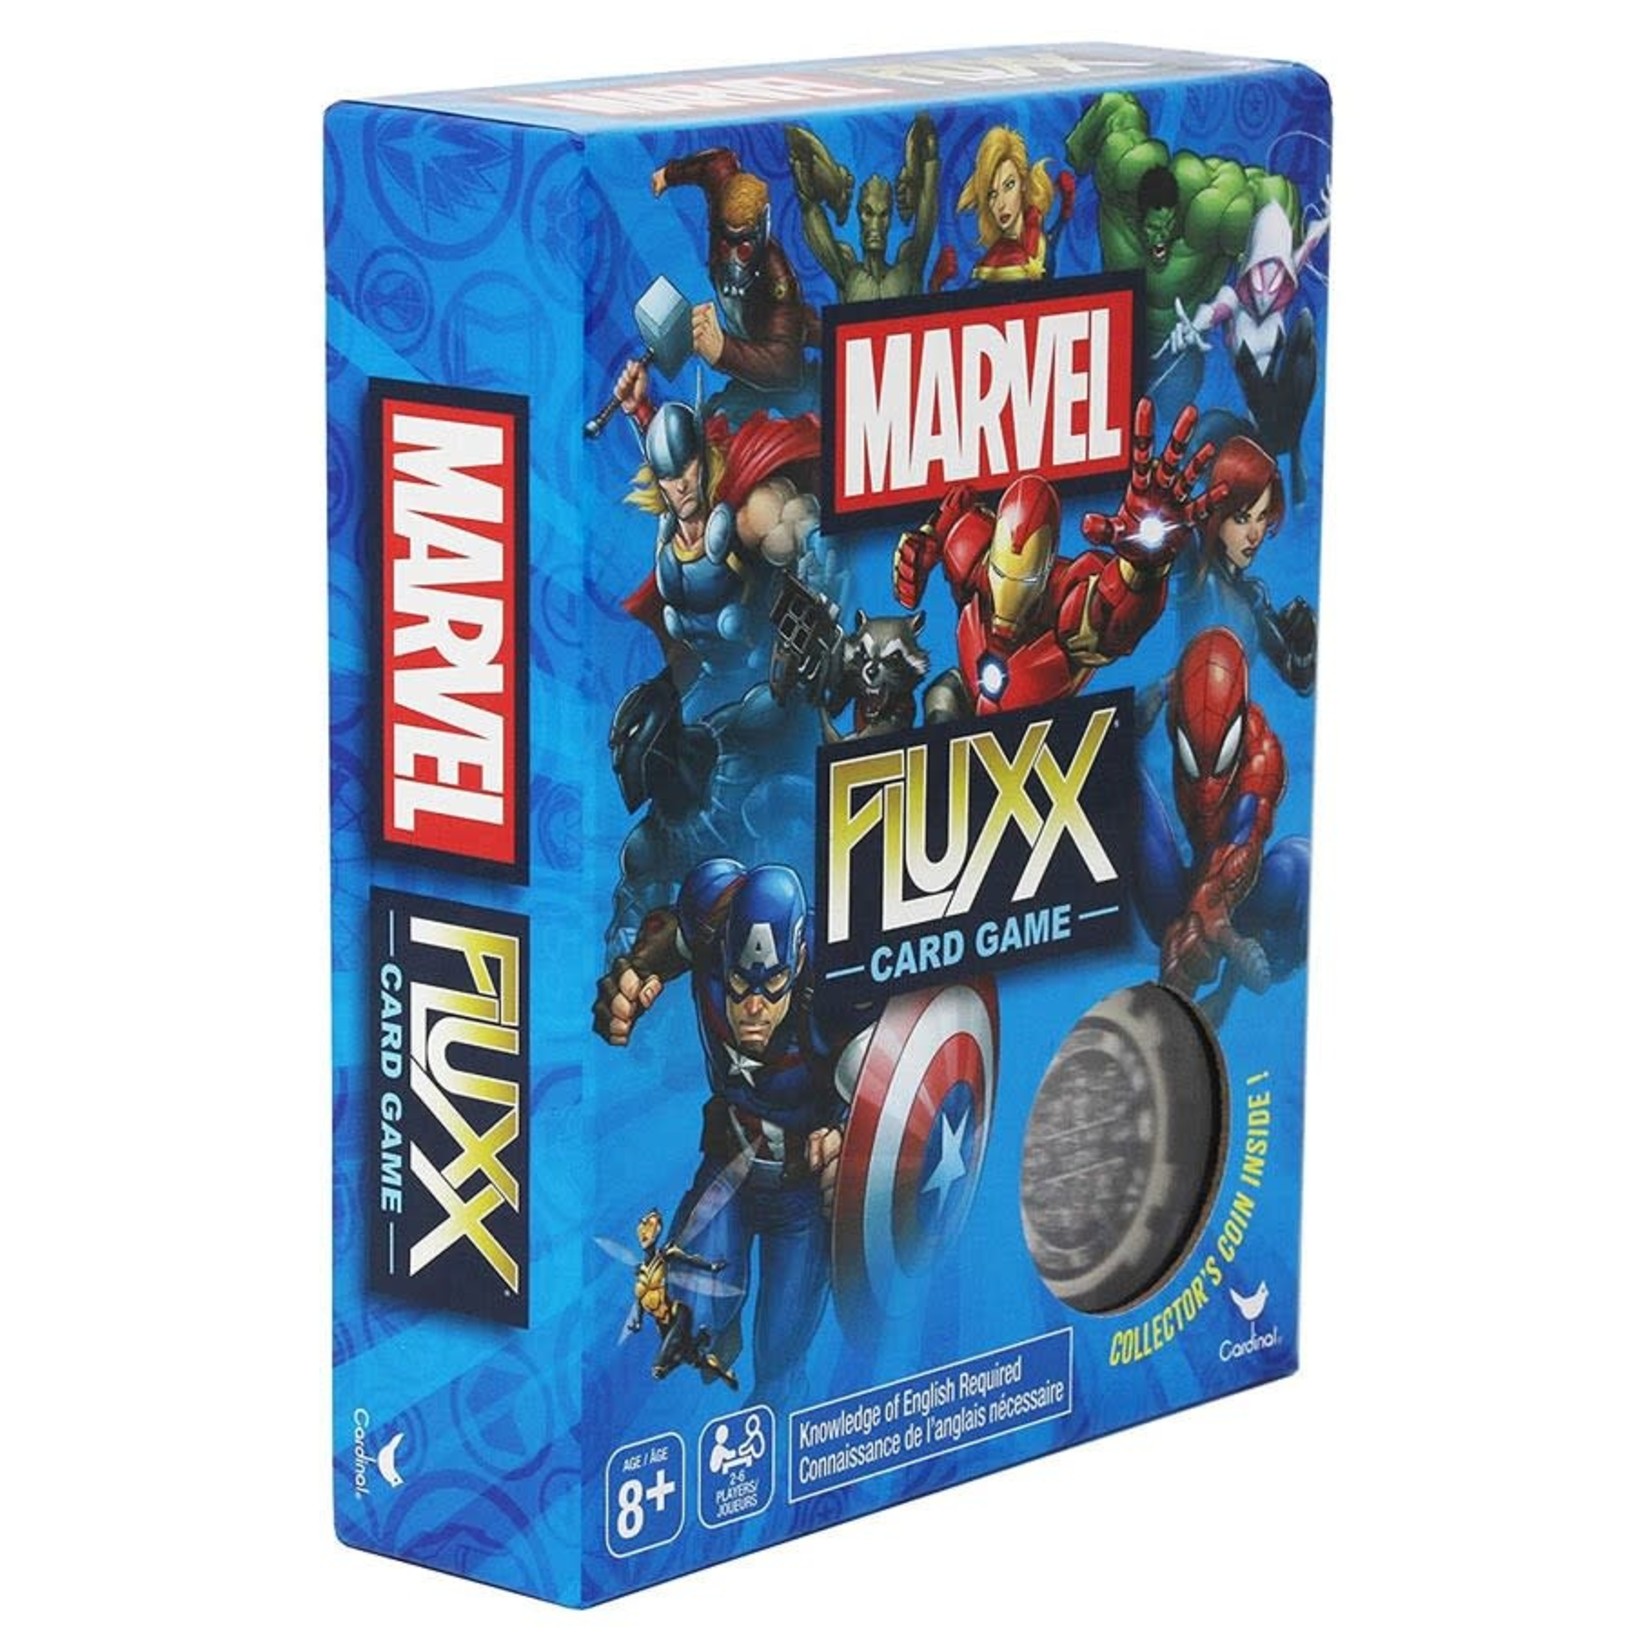 Looney Labs Marvel Fluxx